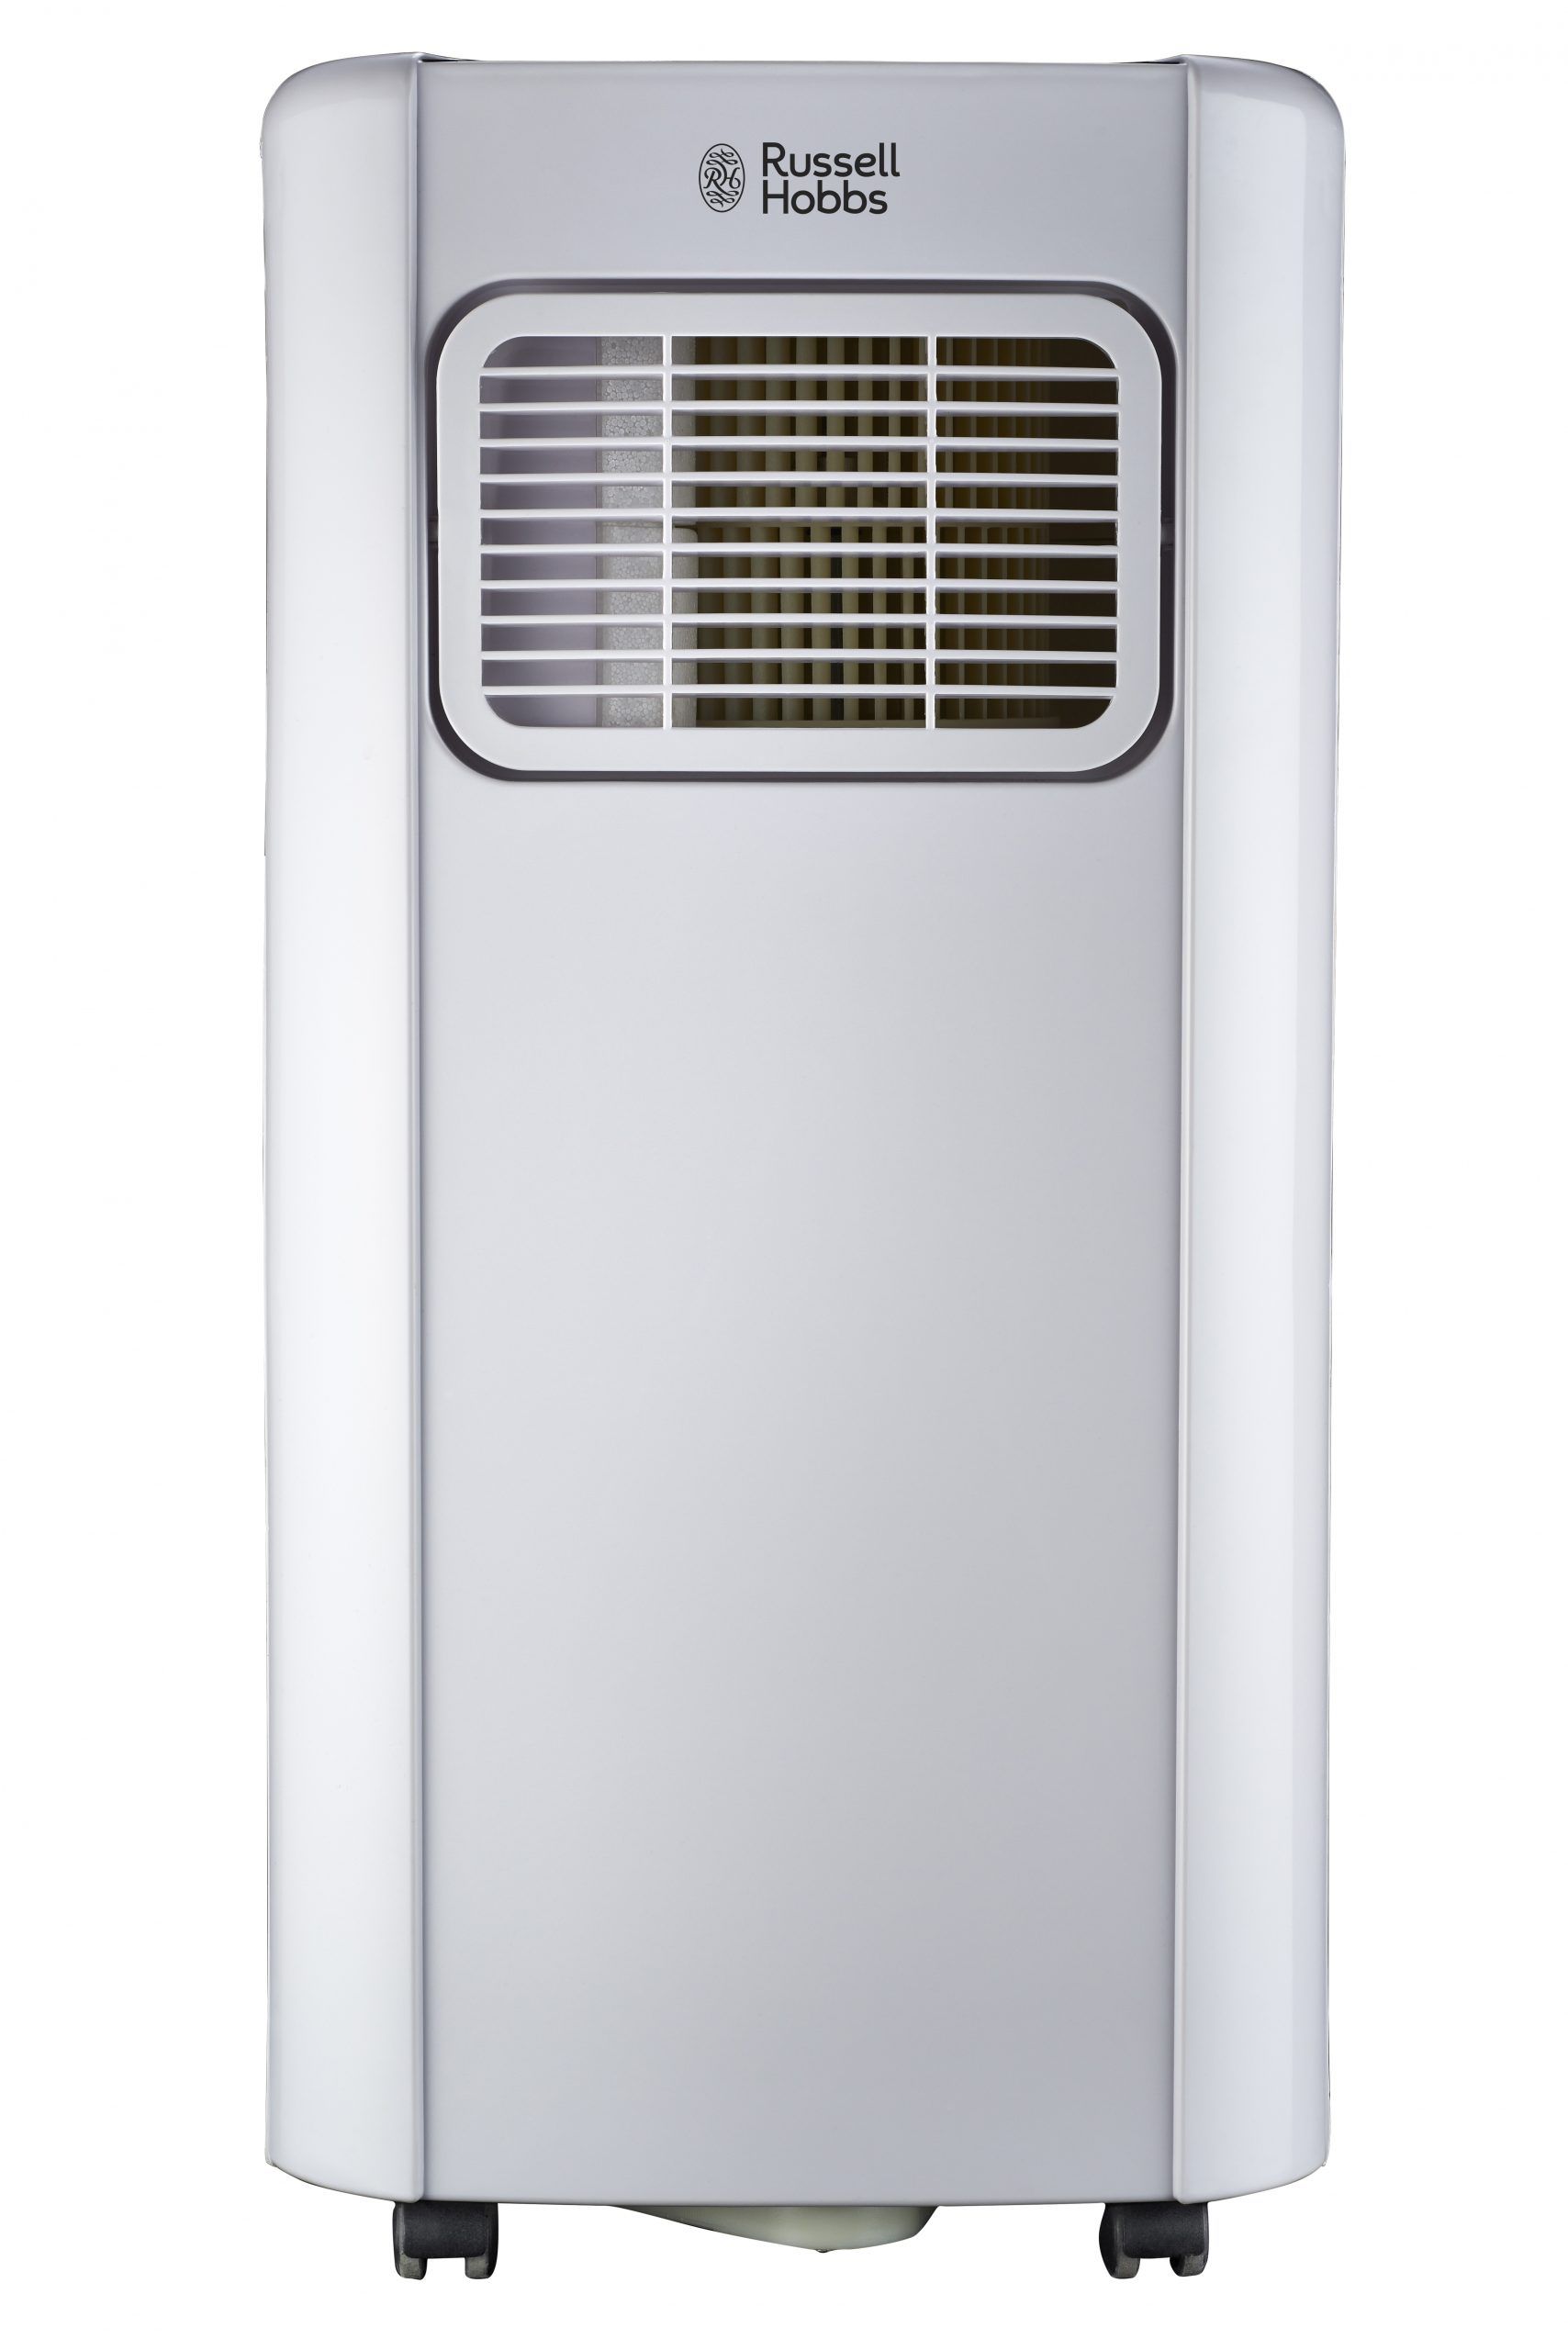 Russell Hobbs Portable Air Conditioner RHAC10